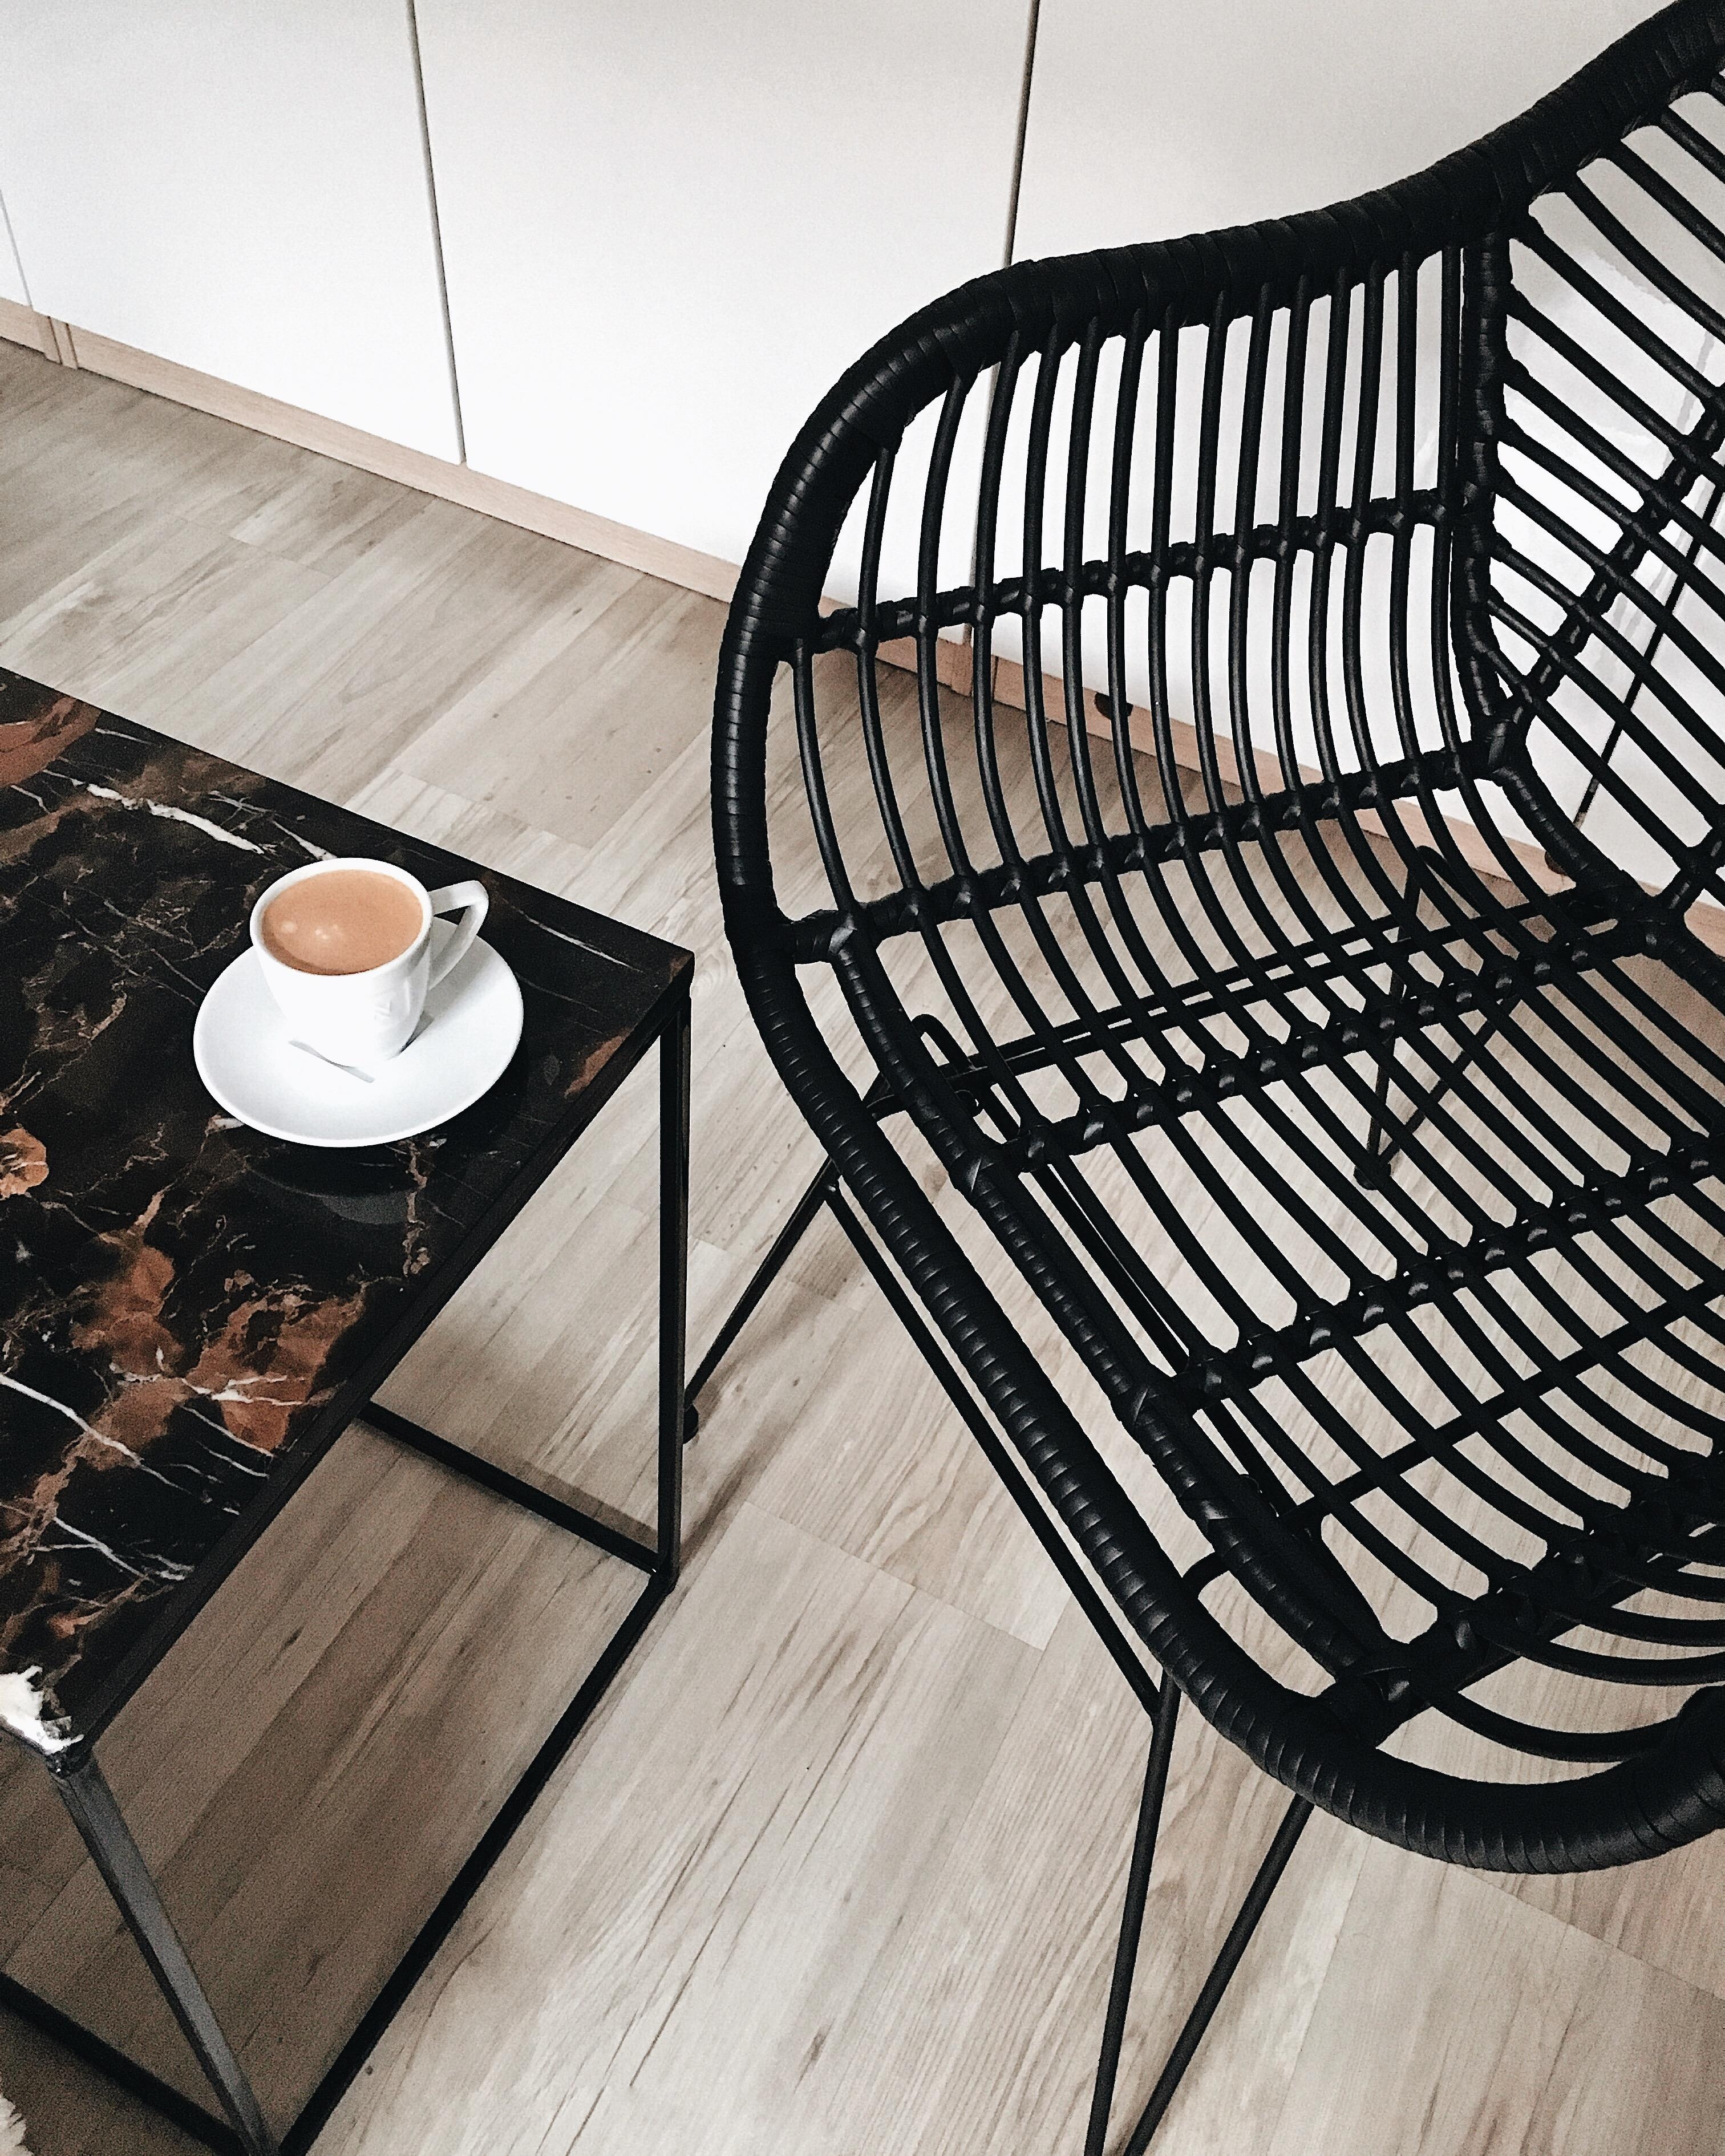 I mean.. #coffee, #marble, #minimalistic interiors. You know me. #home #interior #interiorgoals #livingroom #coffeetable